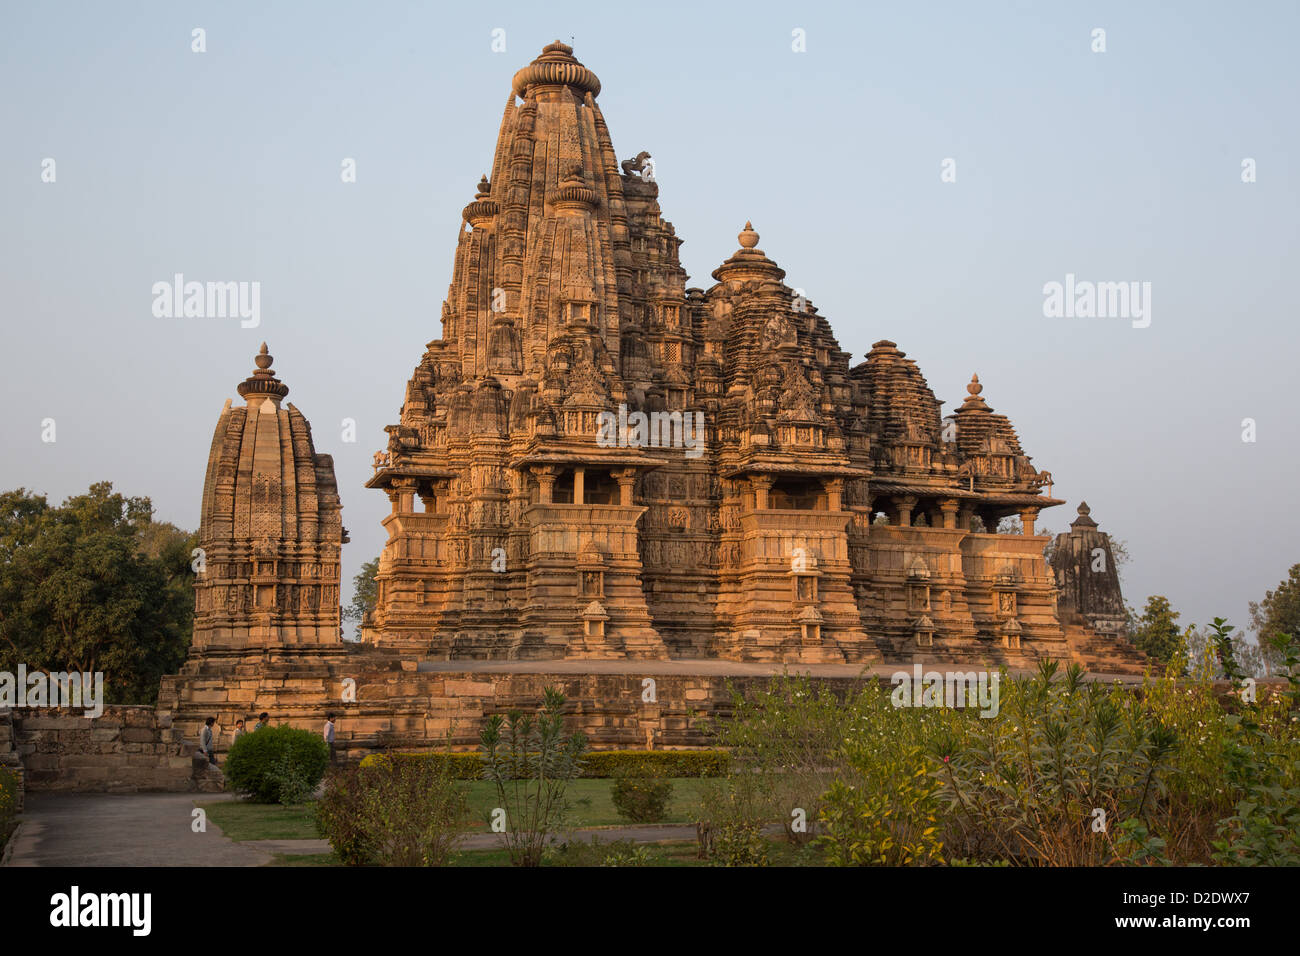 Lakshmana tempio indù, Khajuraho, India Foto Stock